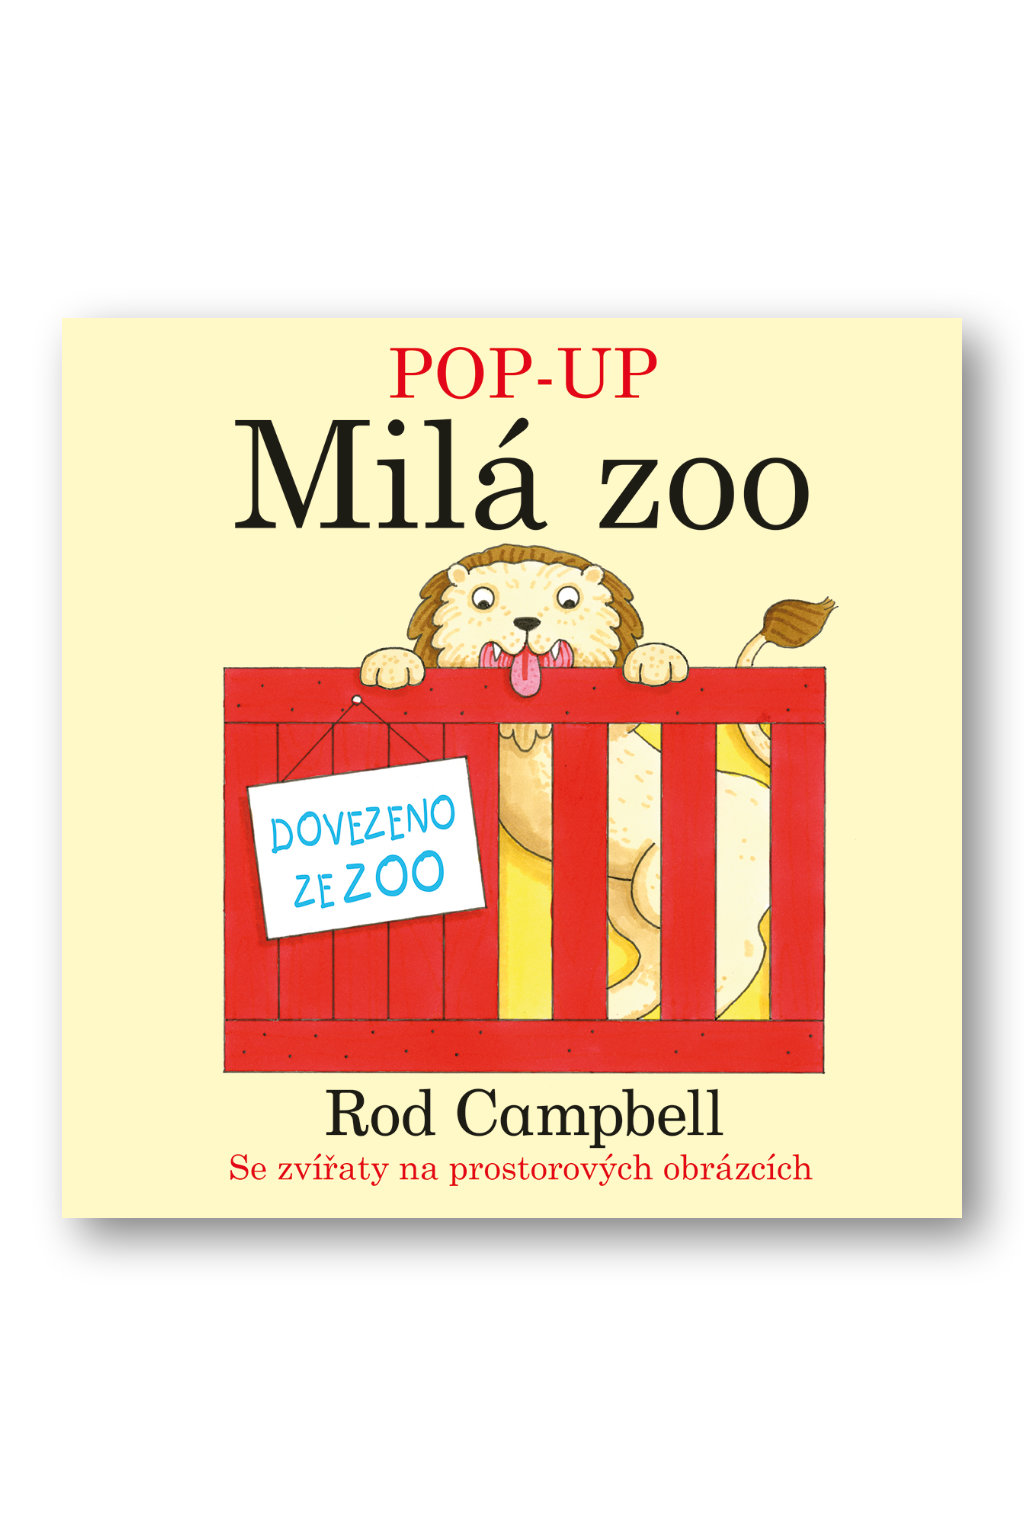 POP - UP Milá Zoo Rod Campbell